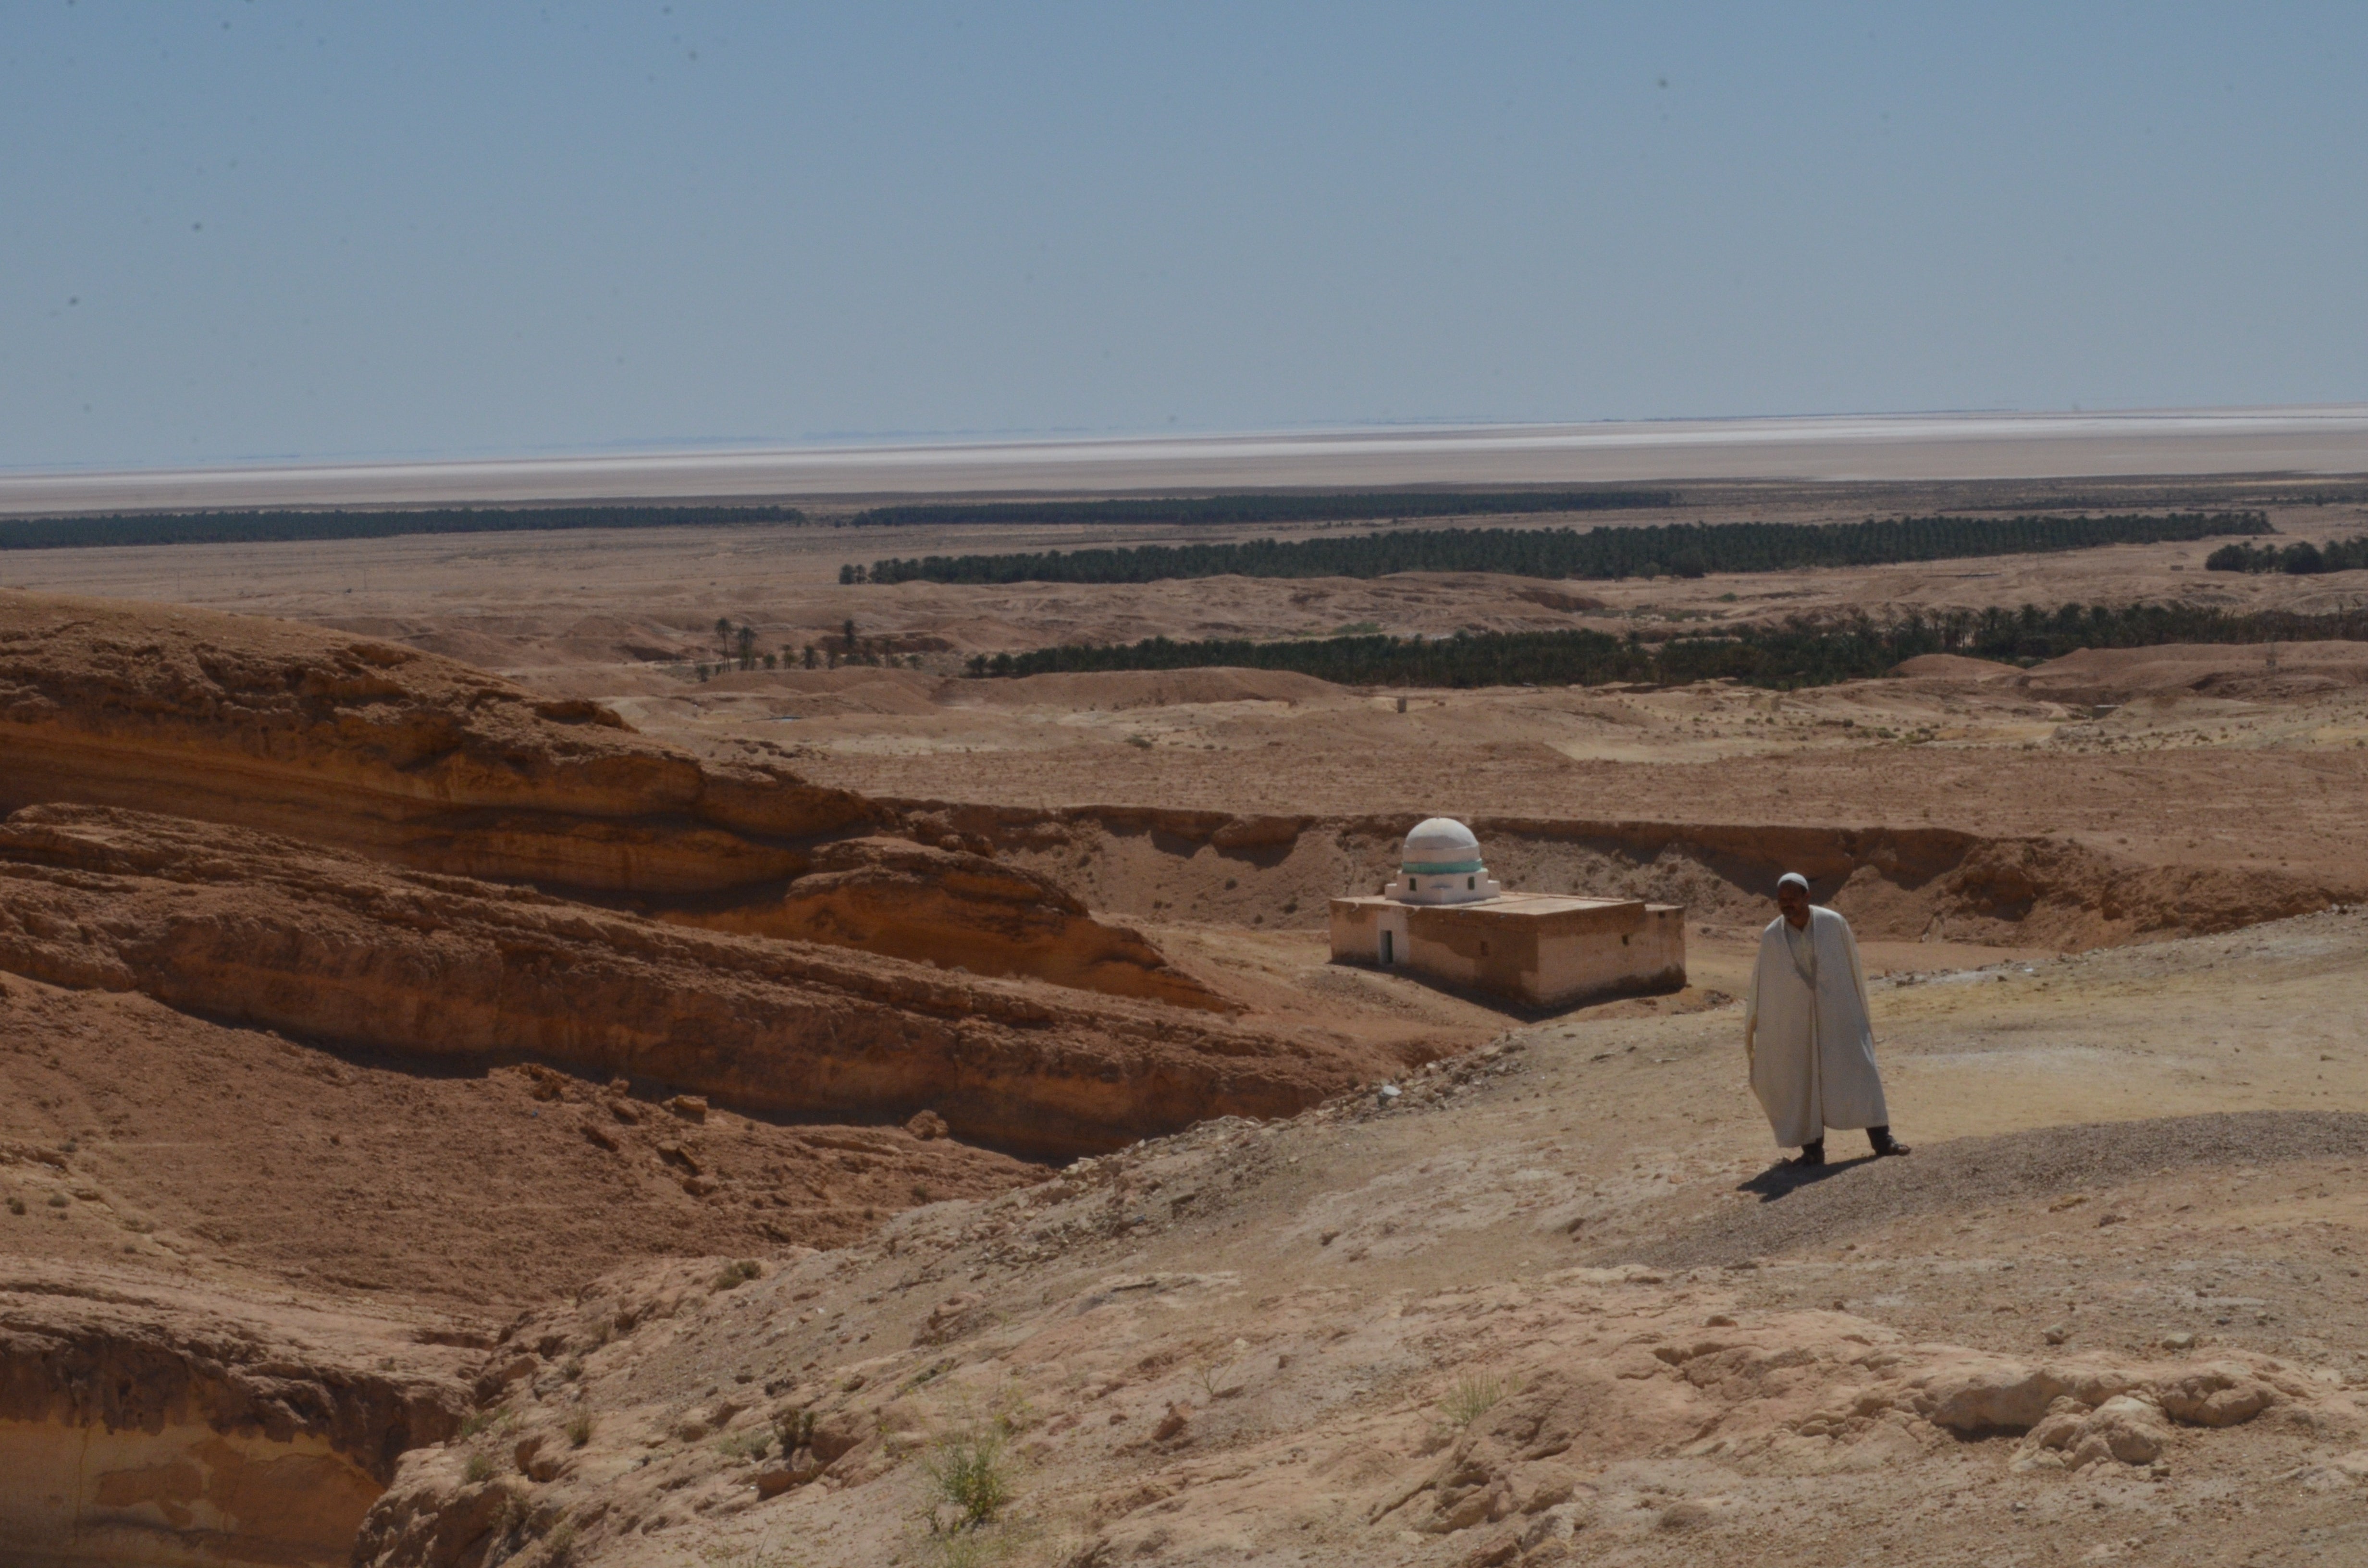 A caretaker of the site in Sidi Blouhel where, in the 1977 ‘Star Wars’ movie, Luke Skywalker looked down on the Tusken Raiders